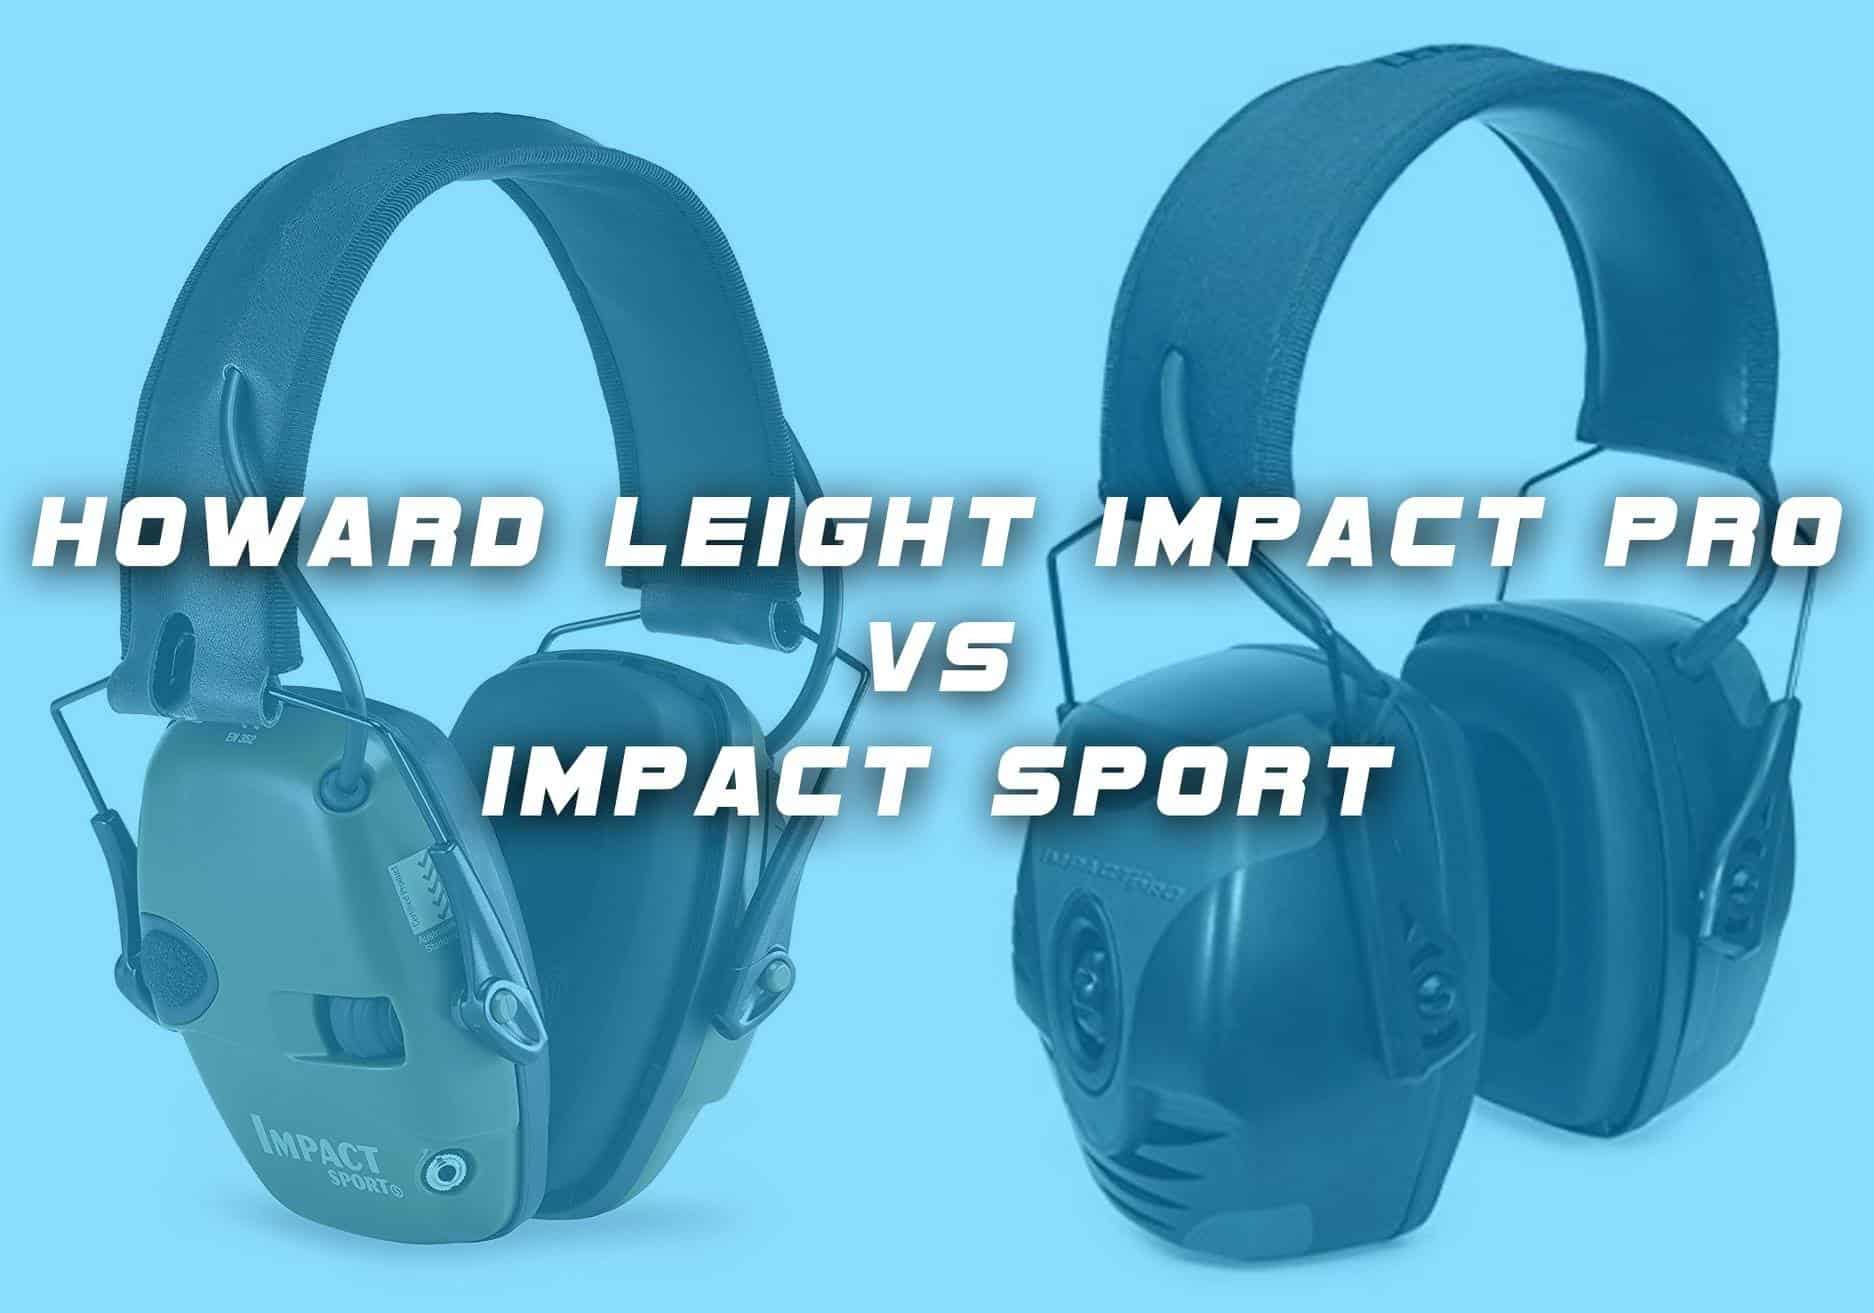 Howard Leight Impact Pro VS Impact Sport